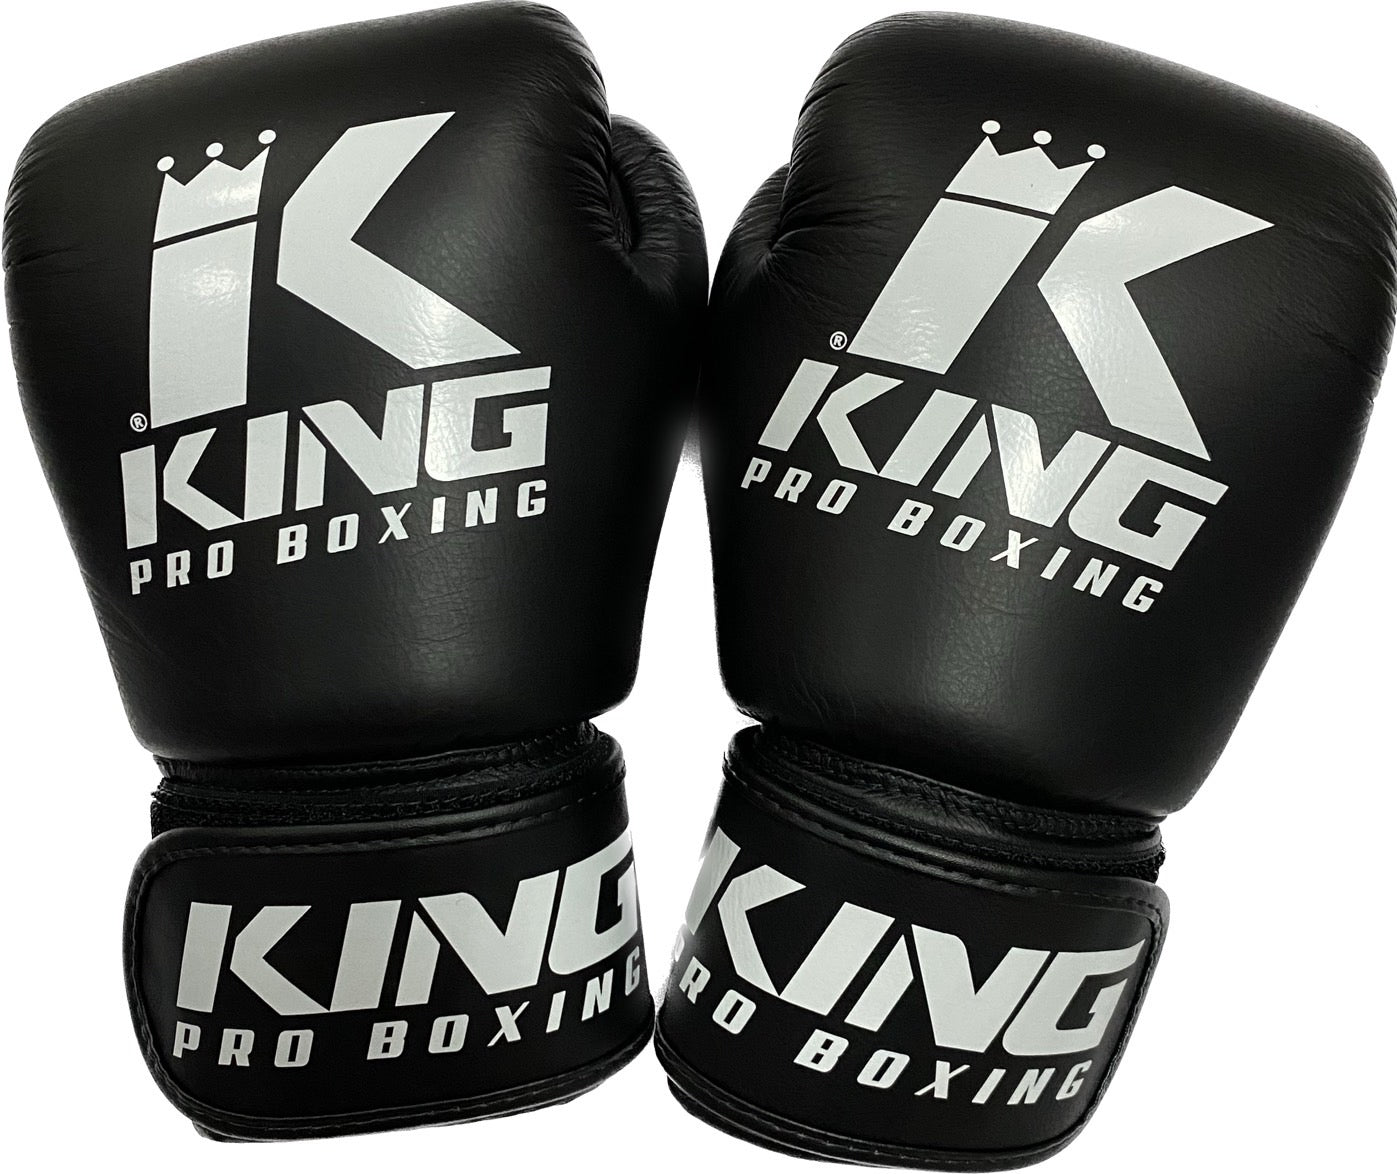 King Pro Boxing Gloves